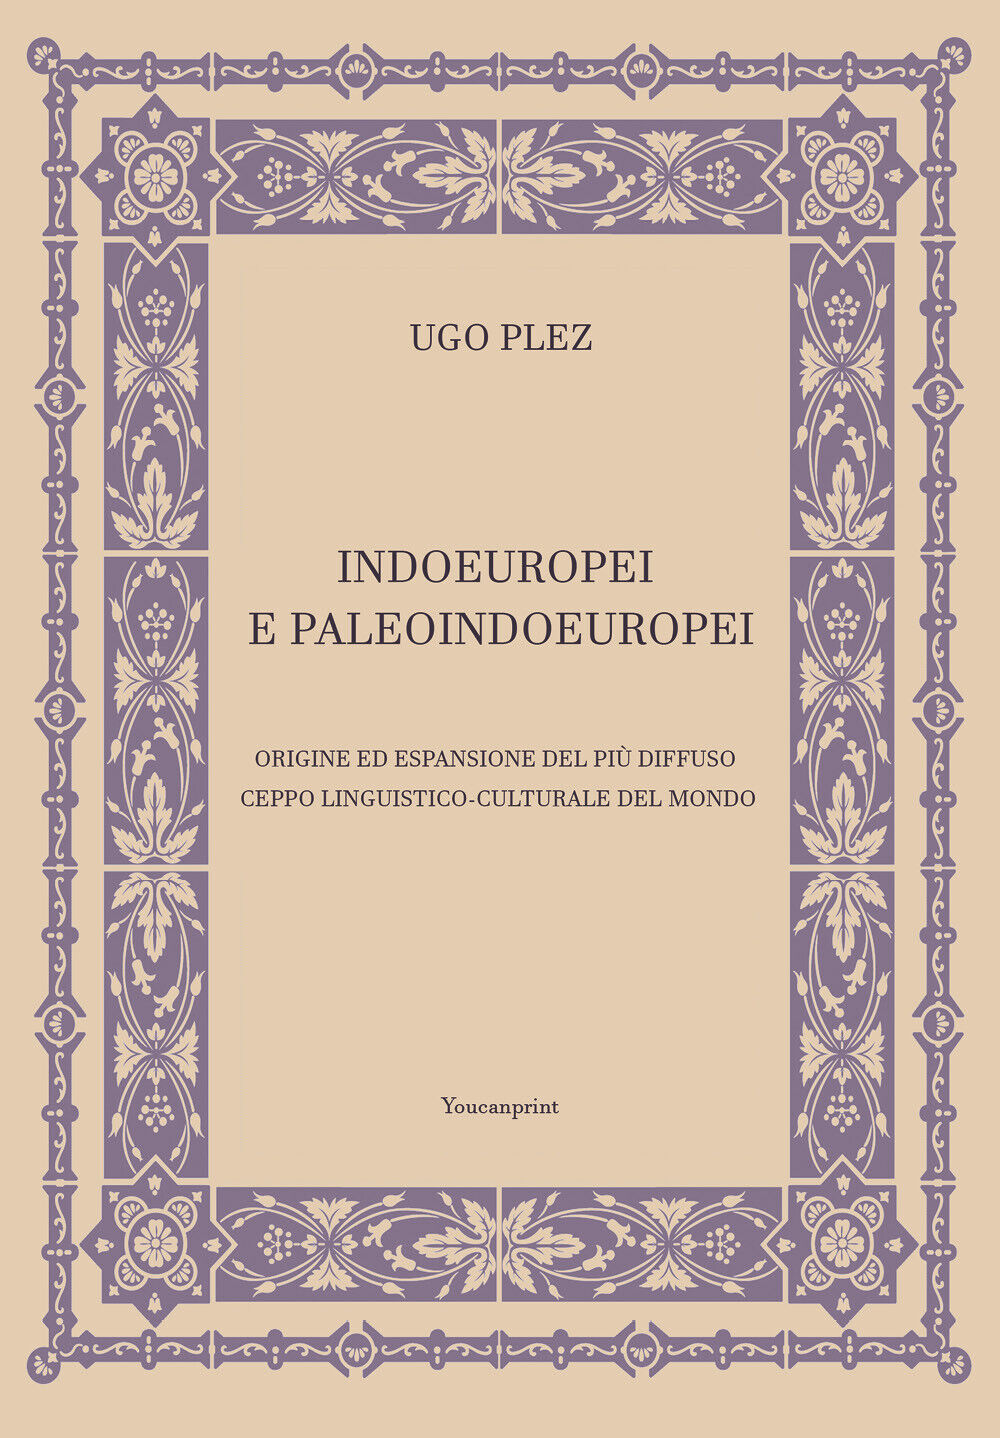 Indoeuropei e paleoindoeuropei di Ugo Plez,  2021,  Youcanprint